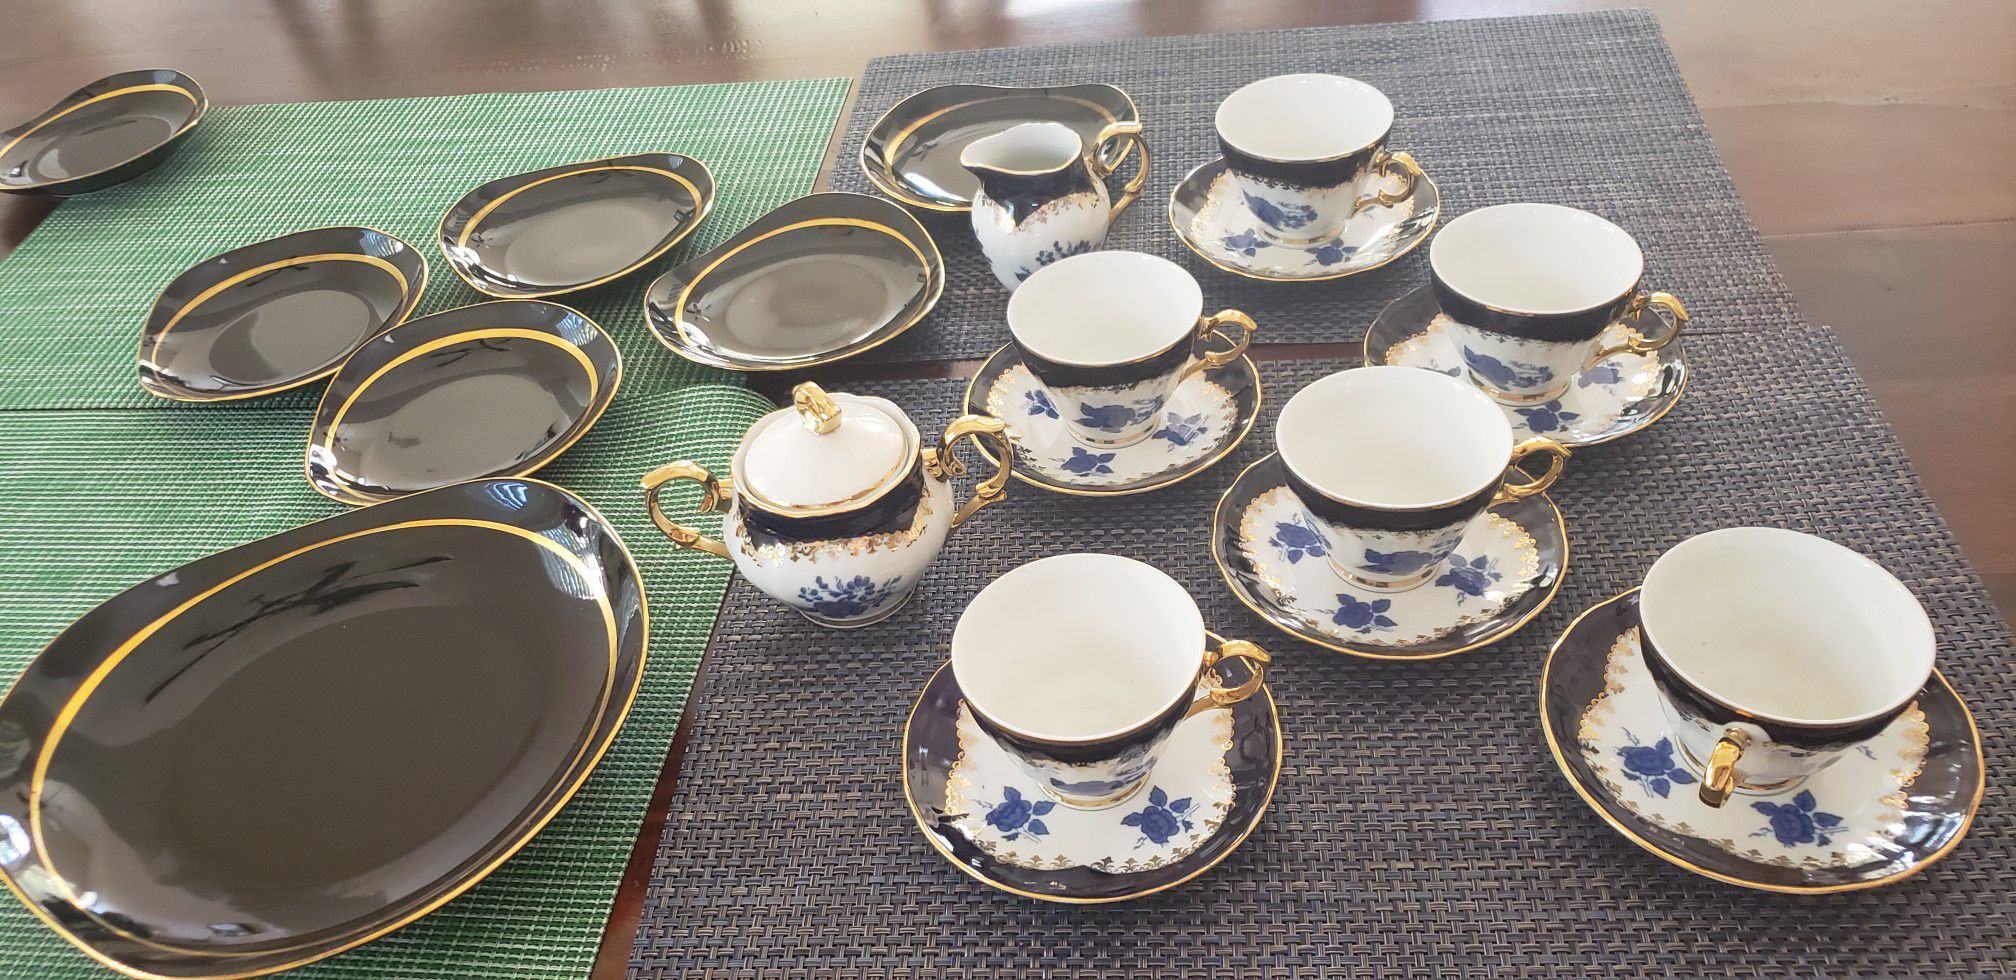 Antique tea porcelain gilded set plus dessert plates for 6